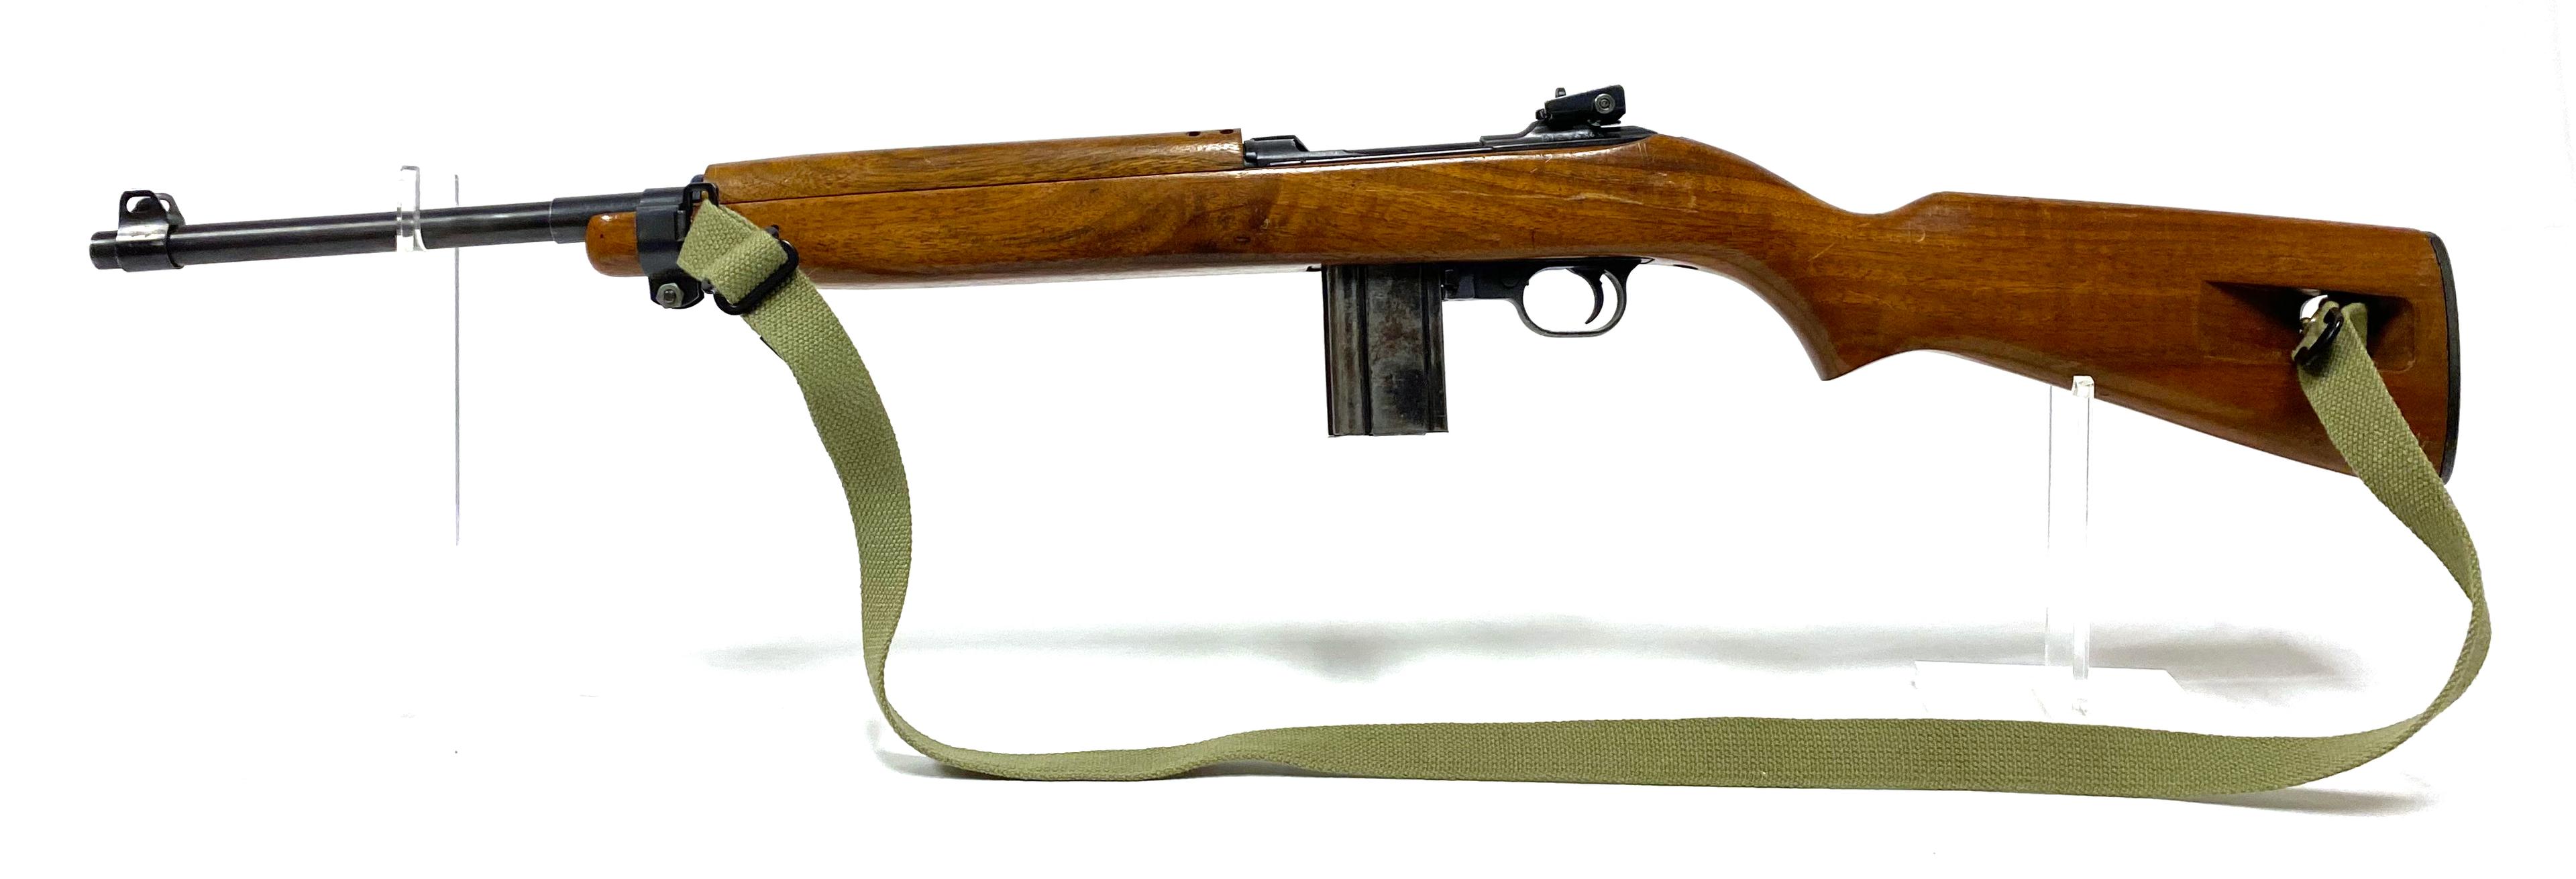 Universal M1 Carbine .30 Carbine Semi-Automatic Rifle